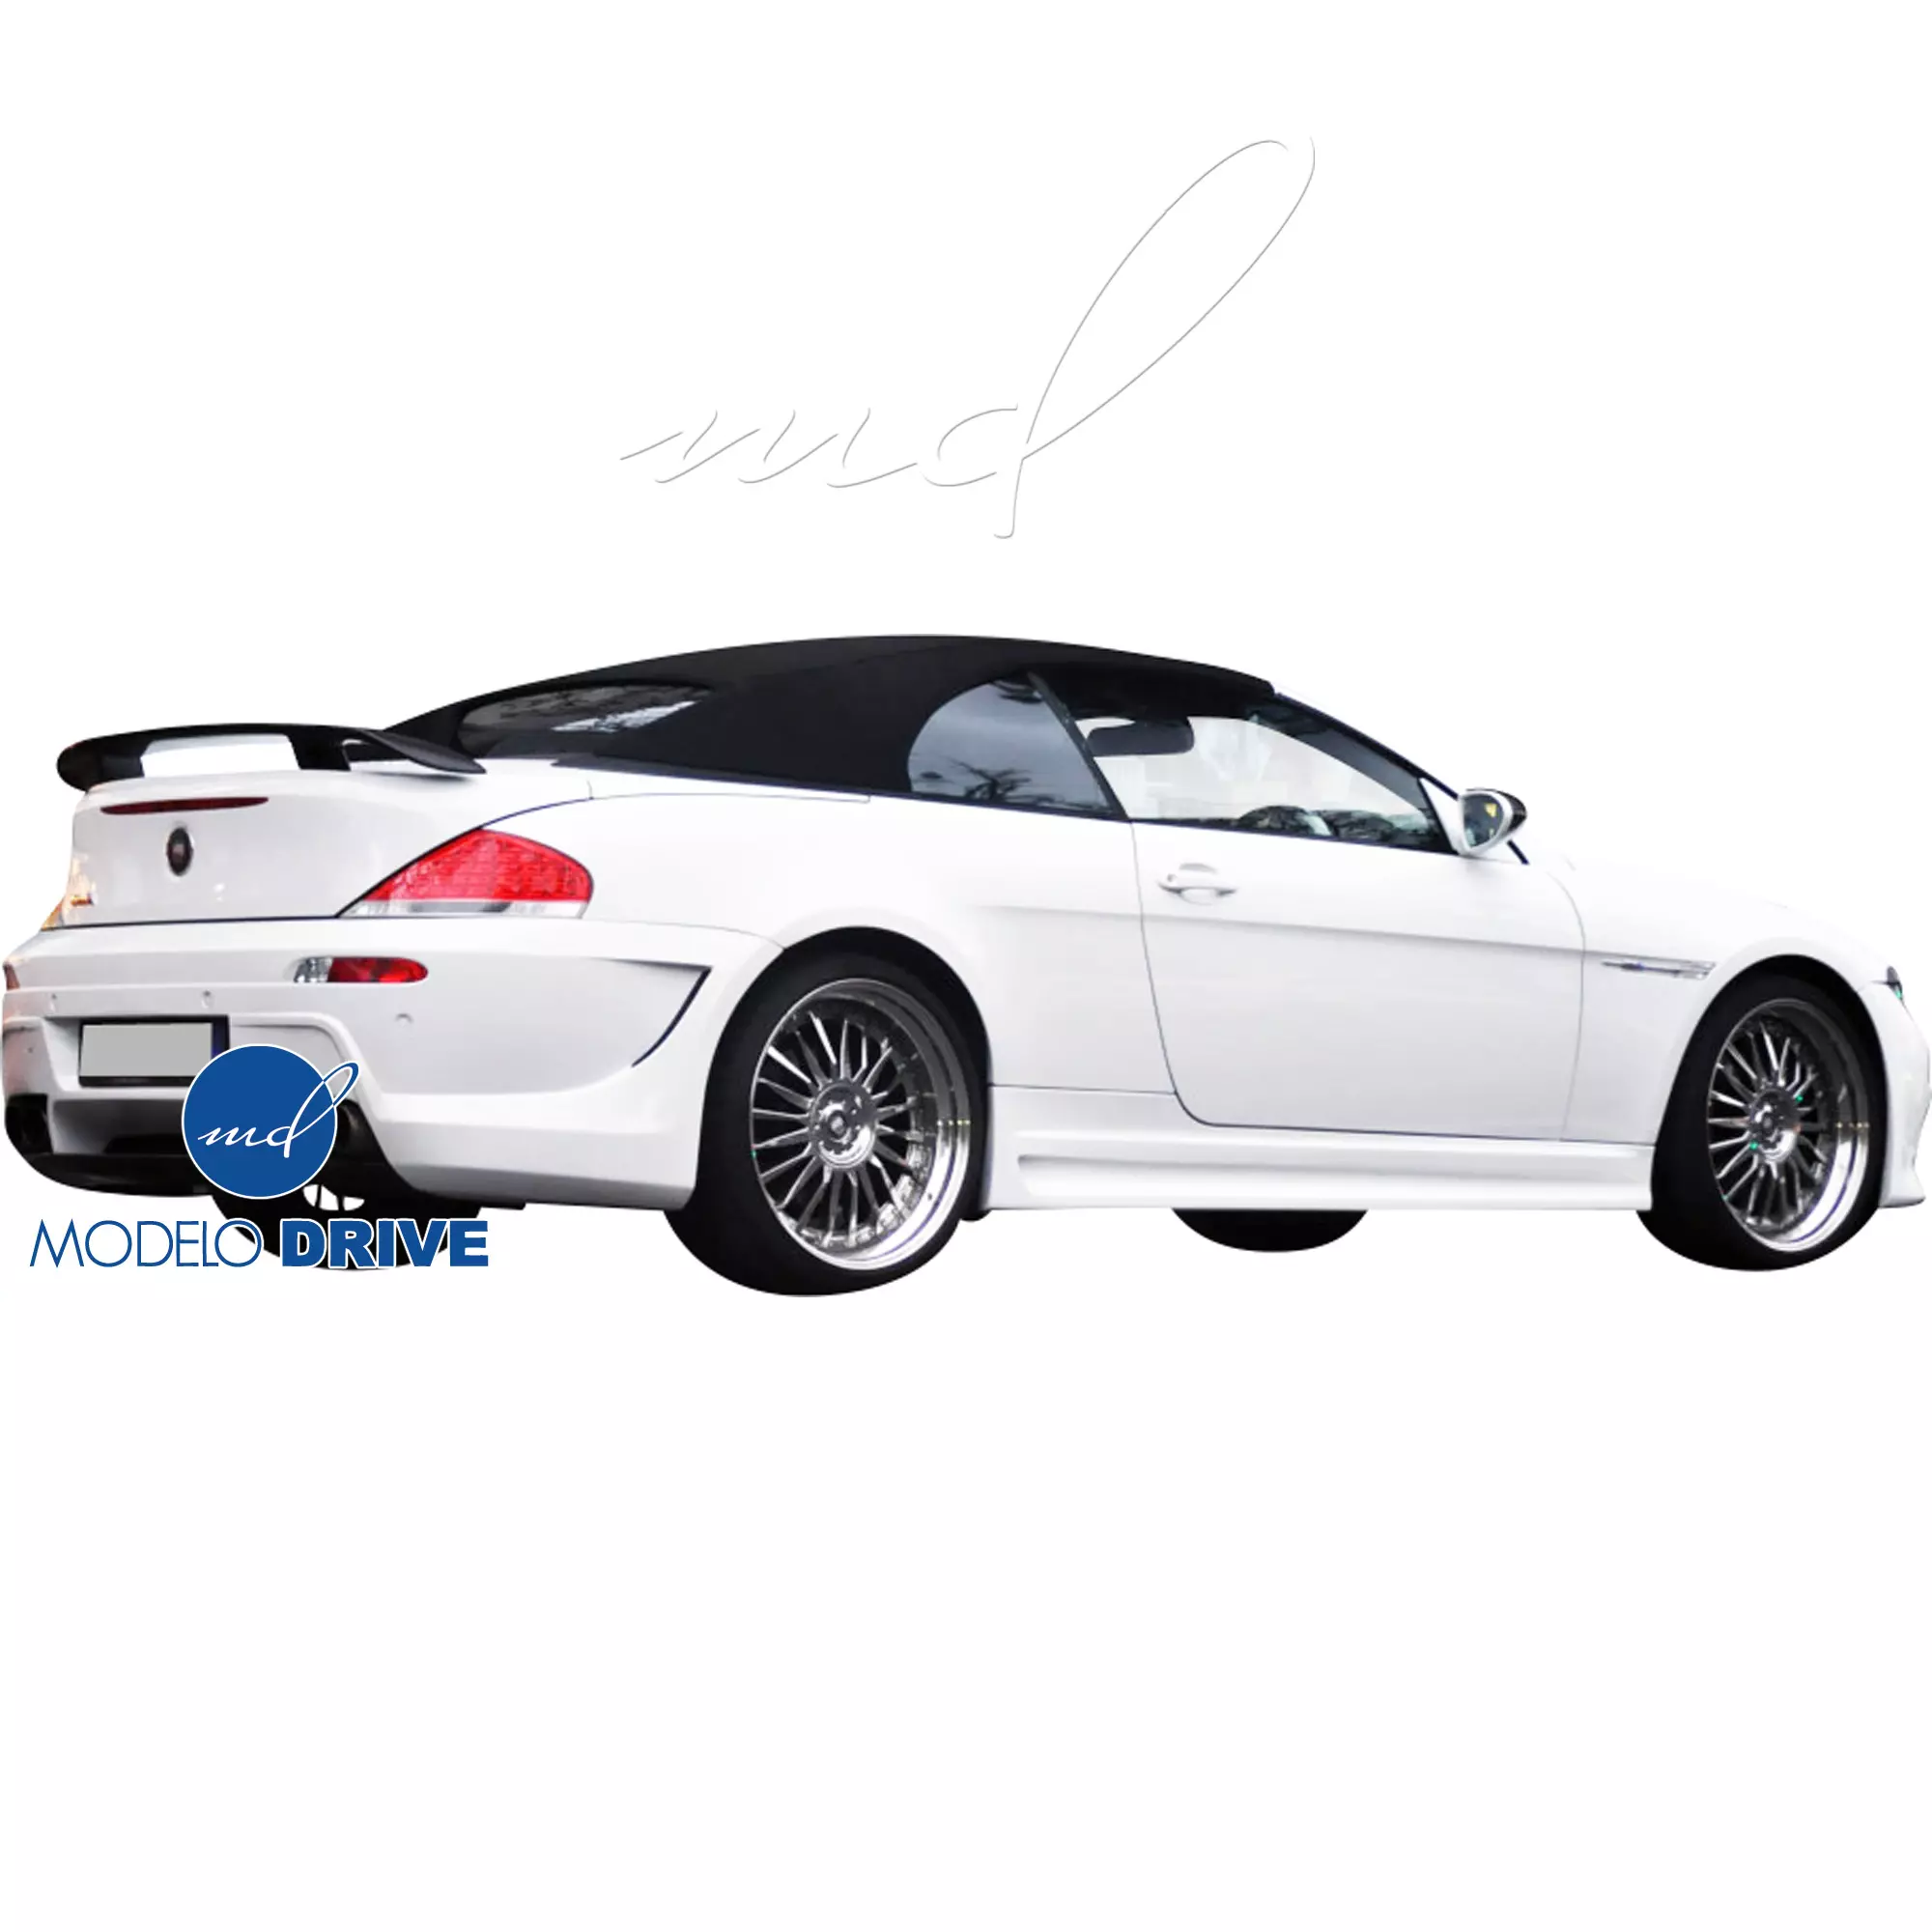 ModeloDrive FRP LDES Body Kit 4pc > BMW 6-Series E63 E64 2004-2010 > 2dr - Image 25